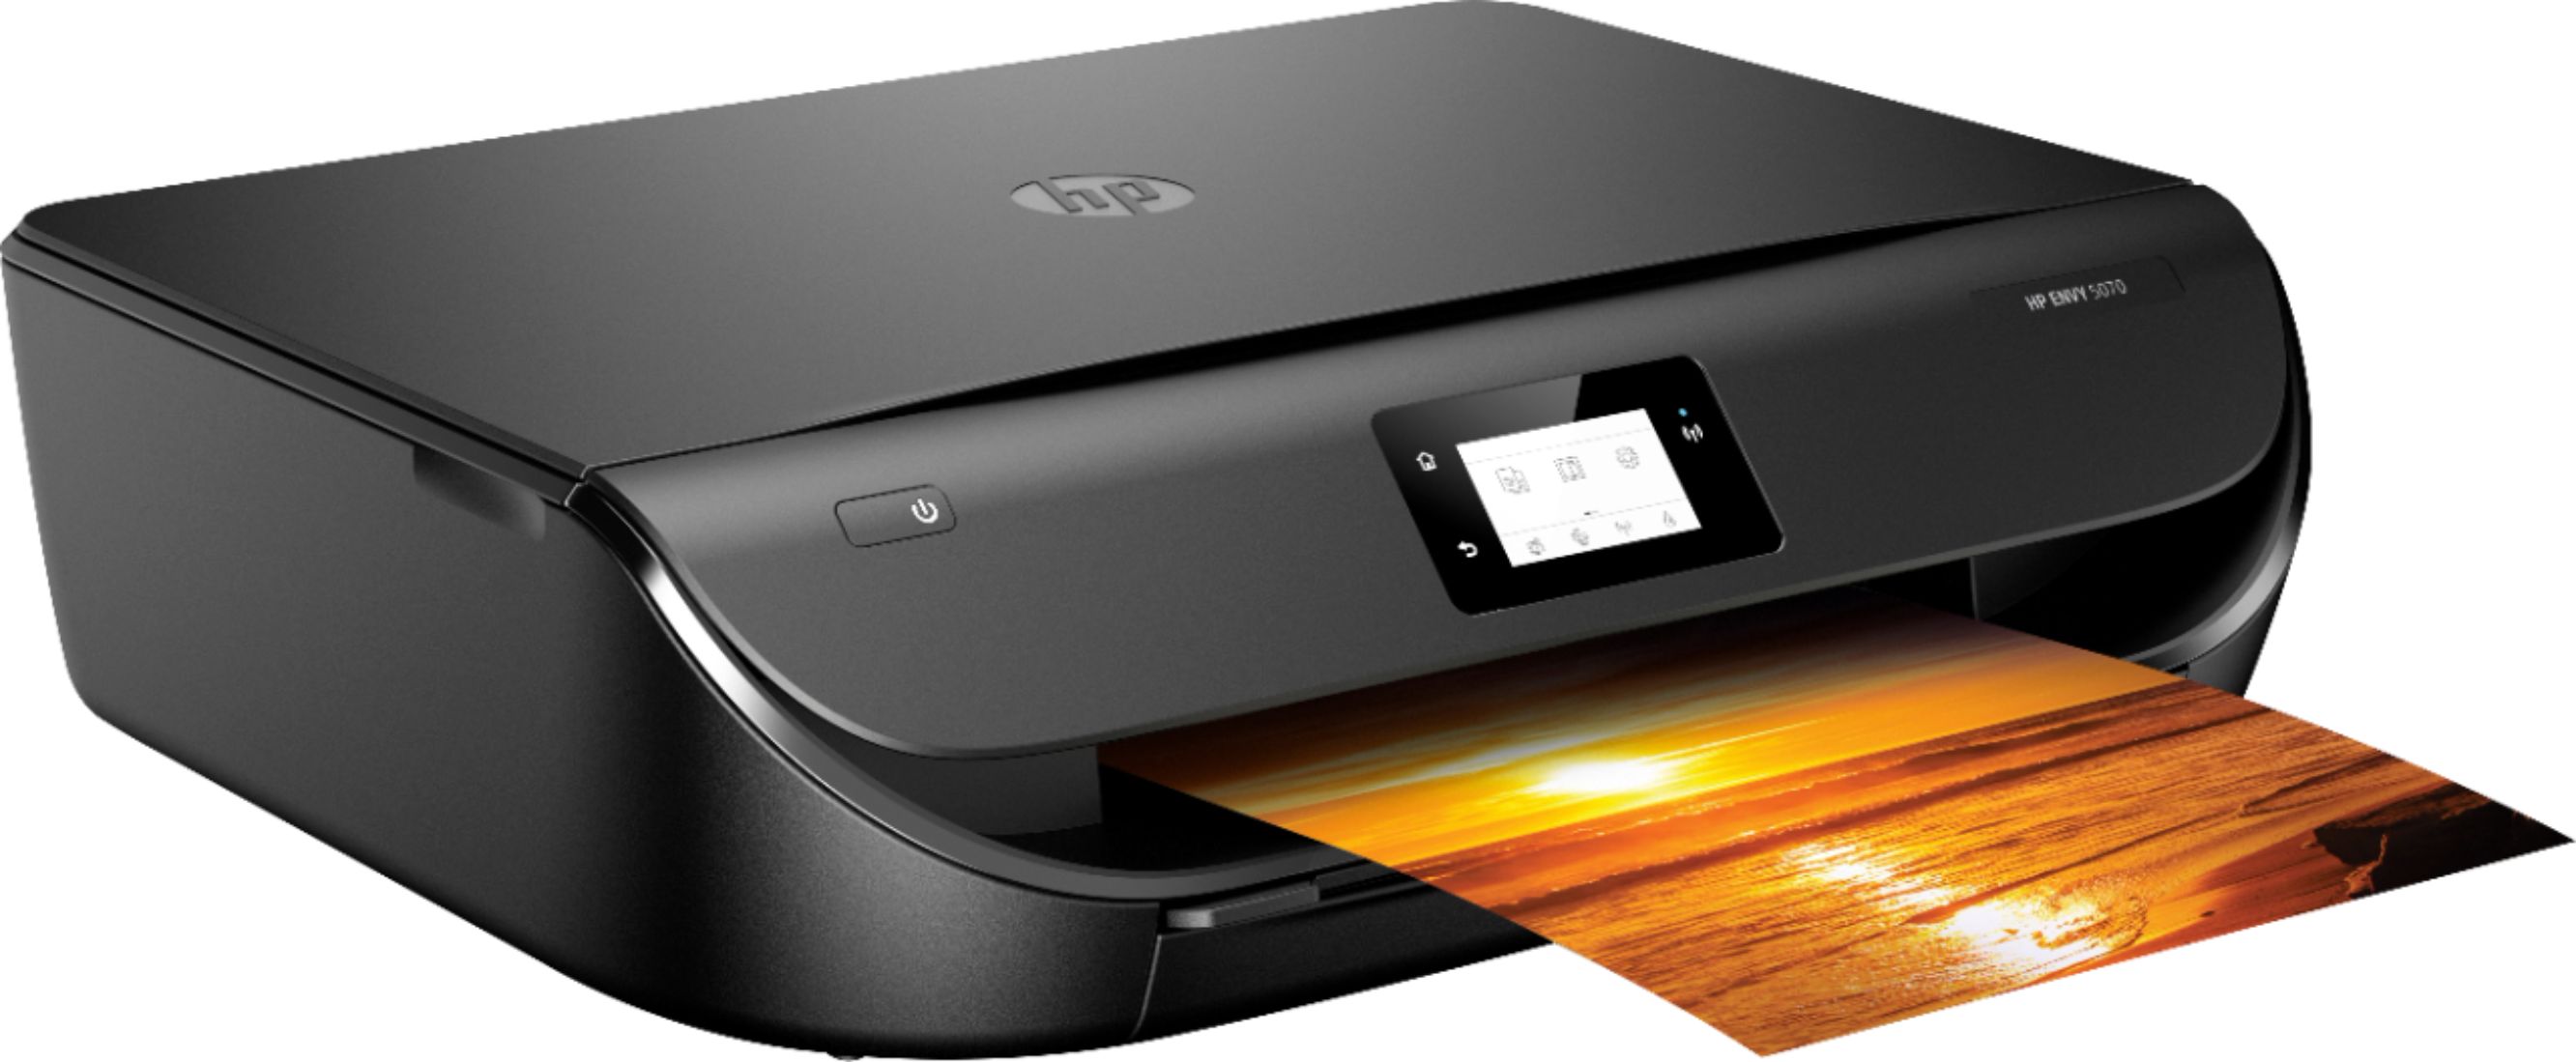 stapel draadloos zoogdier Best Buy: HP ENVY 5070 Wireless All-In-One Instant Ink Ready Inkjet Printer  Black ENVY 5070